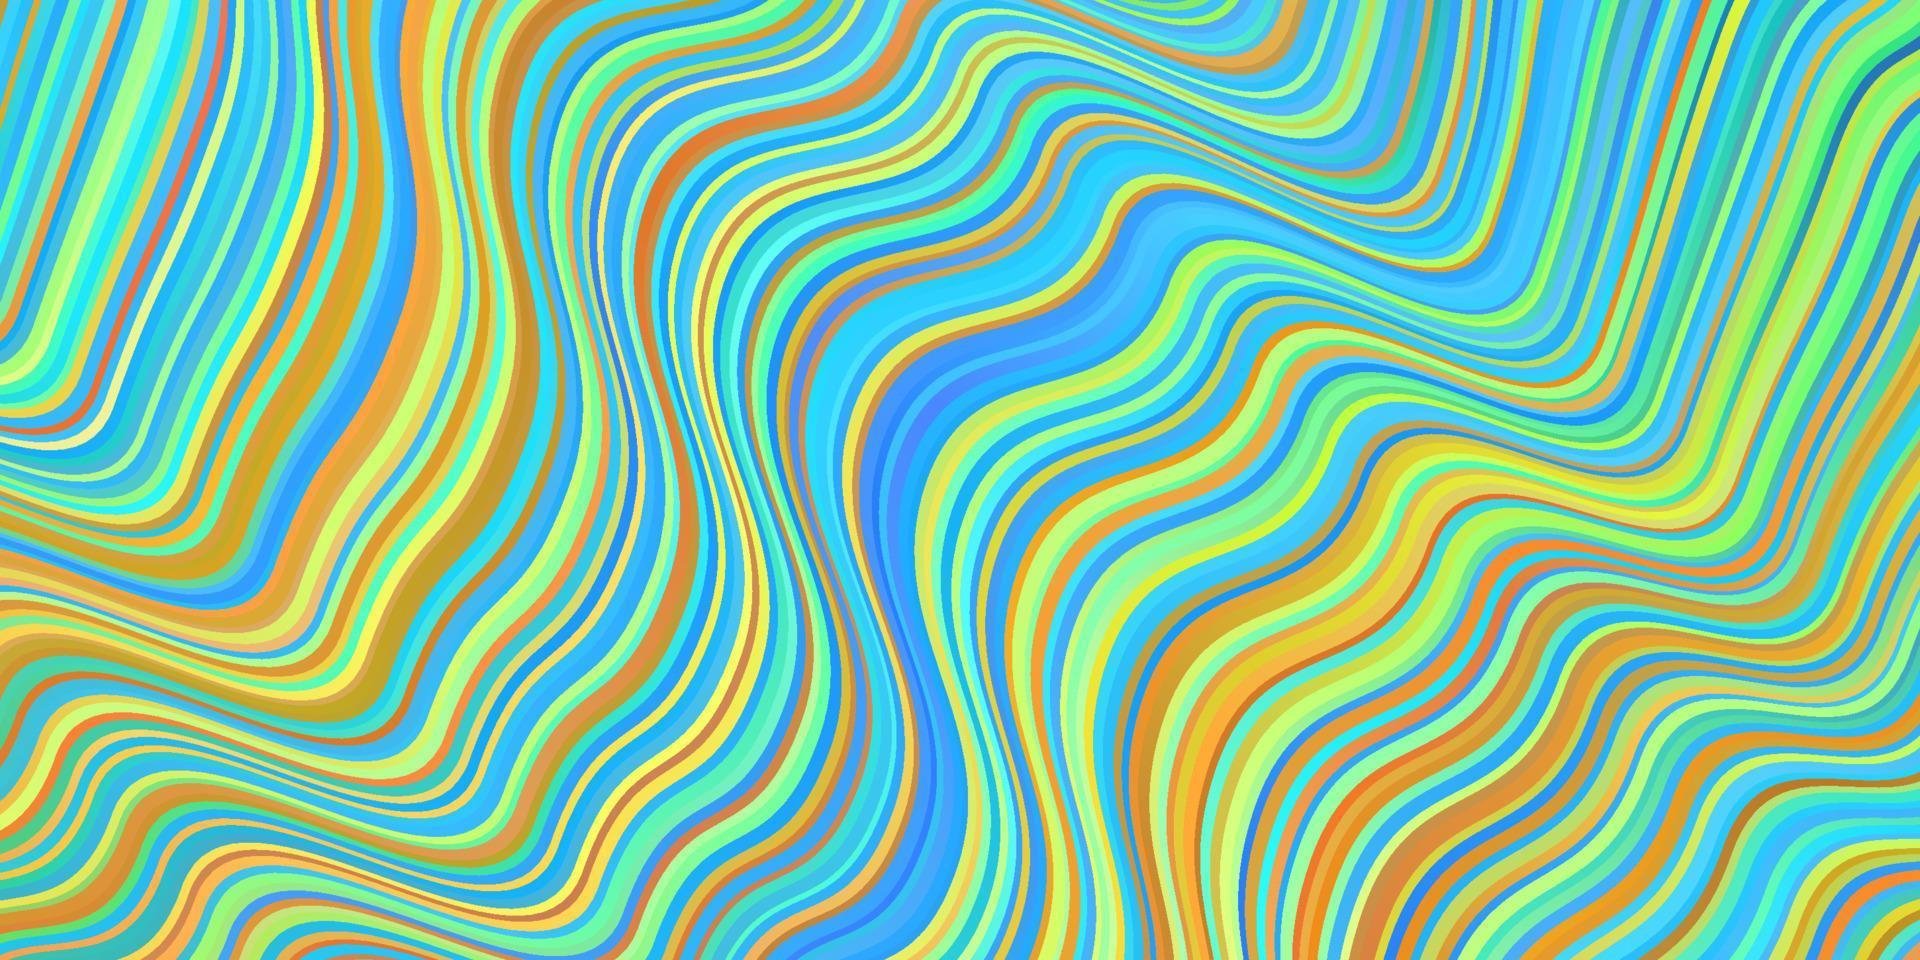 ljusblå, gul vektorbakgrund med linjer. vektor